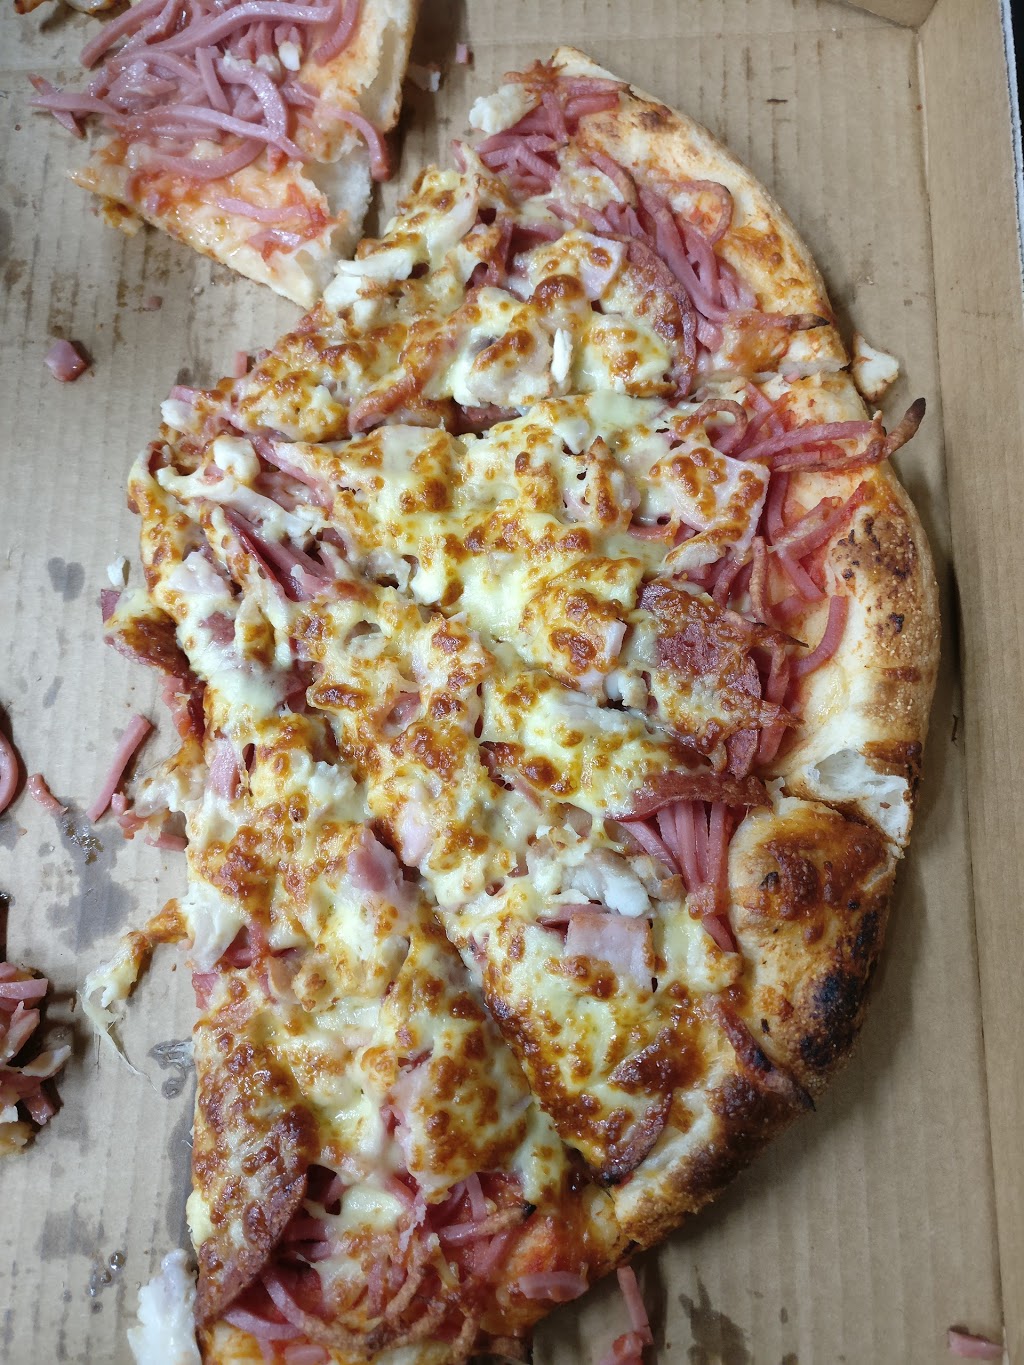 Mansfield Pizza | 30 High St, Mansfield VIC 3722, Australia | Phone: (03) 5775 3088